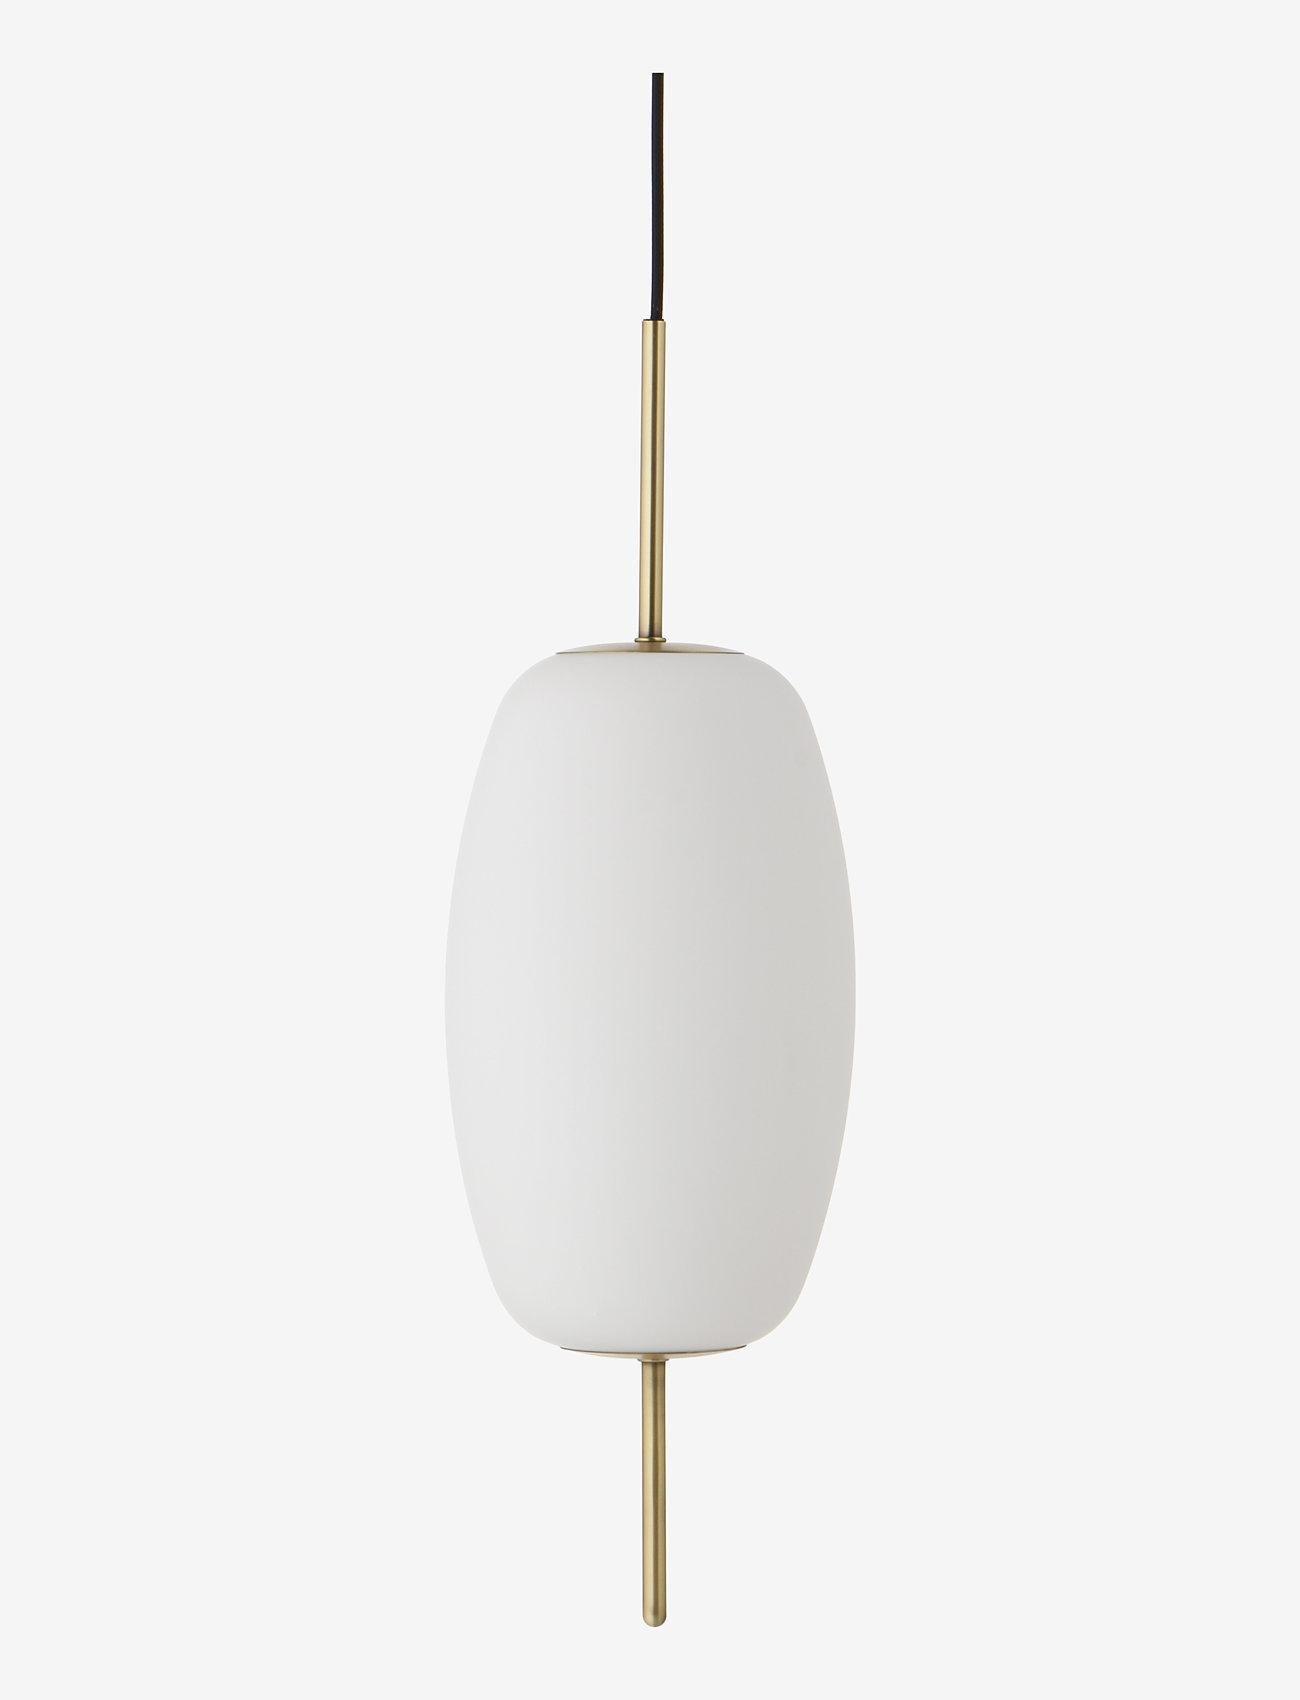 Three Contemporary Scandinavian Design Satin Glass Brass Light Pendants, Danmark For Sale 1